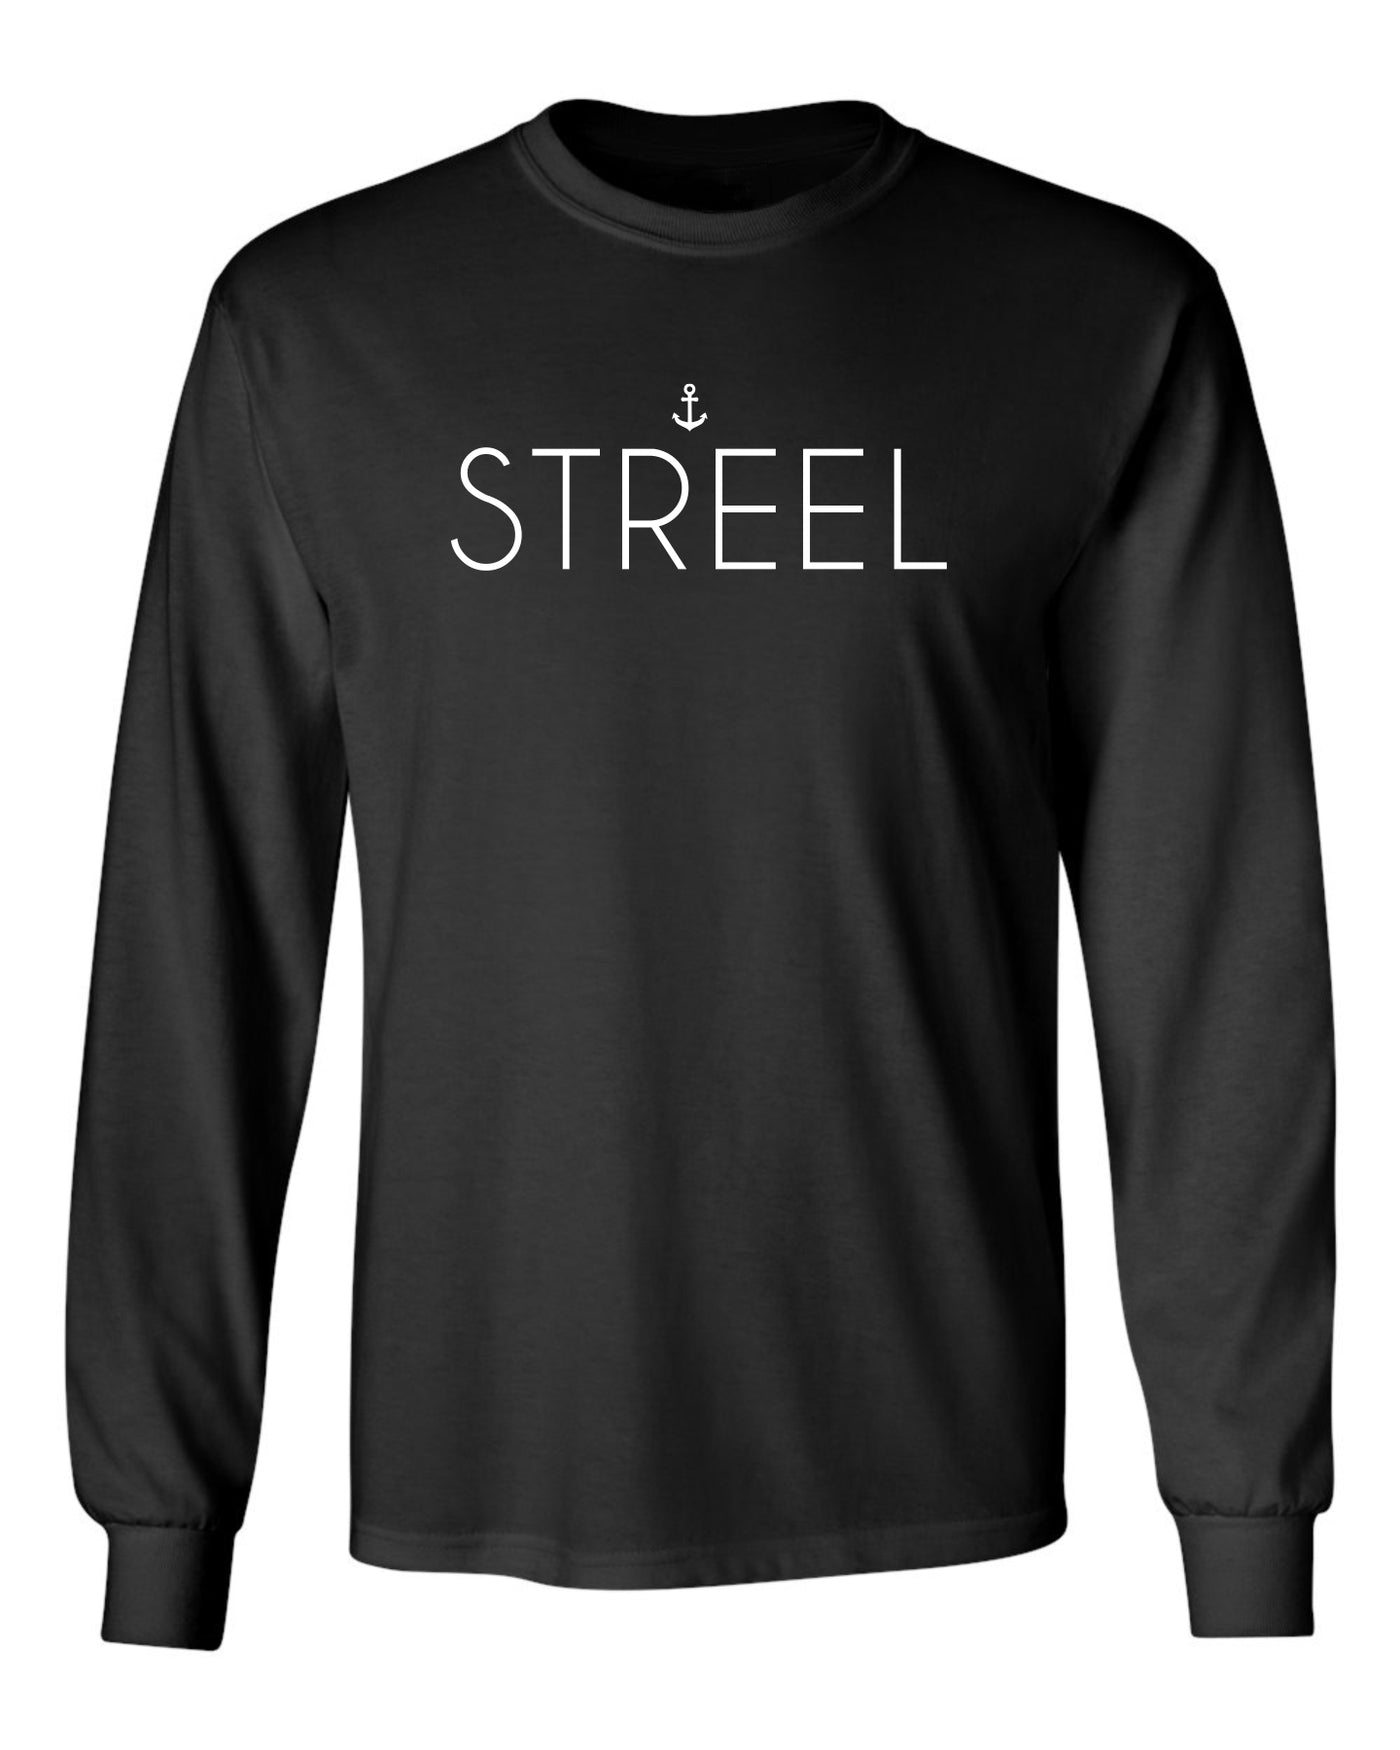 "Streel" Unisex Long Sleeve Shirt